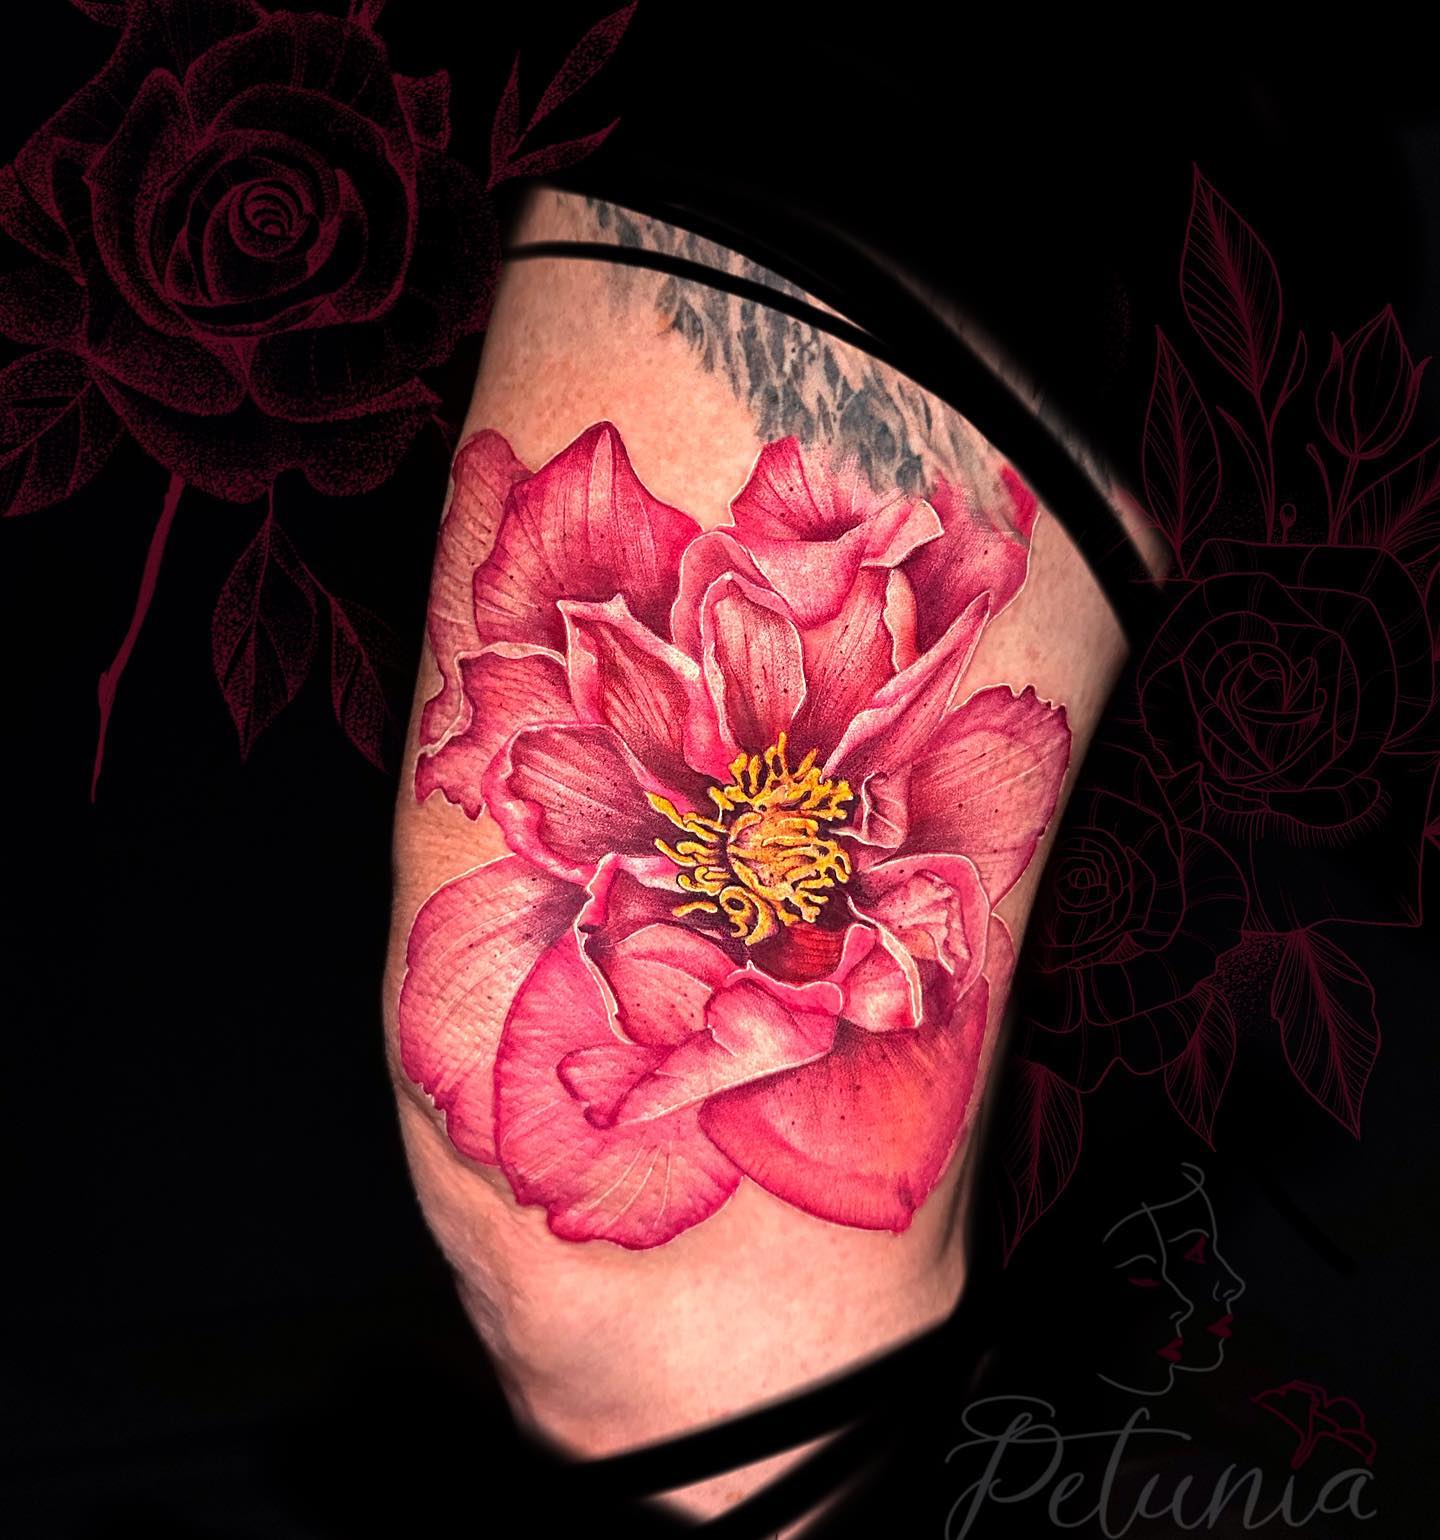 Tatuaje de flor rosa por encima de la rodilla.